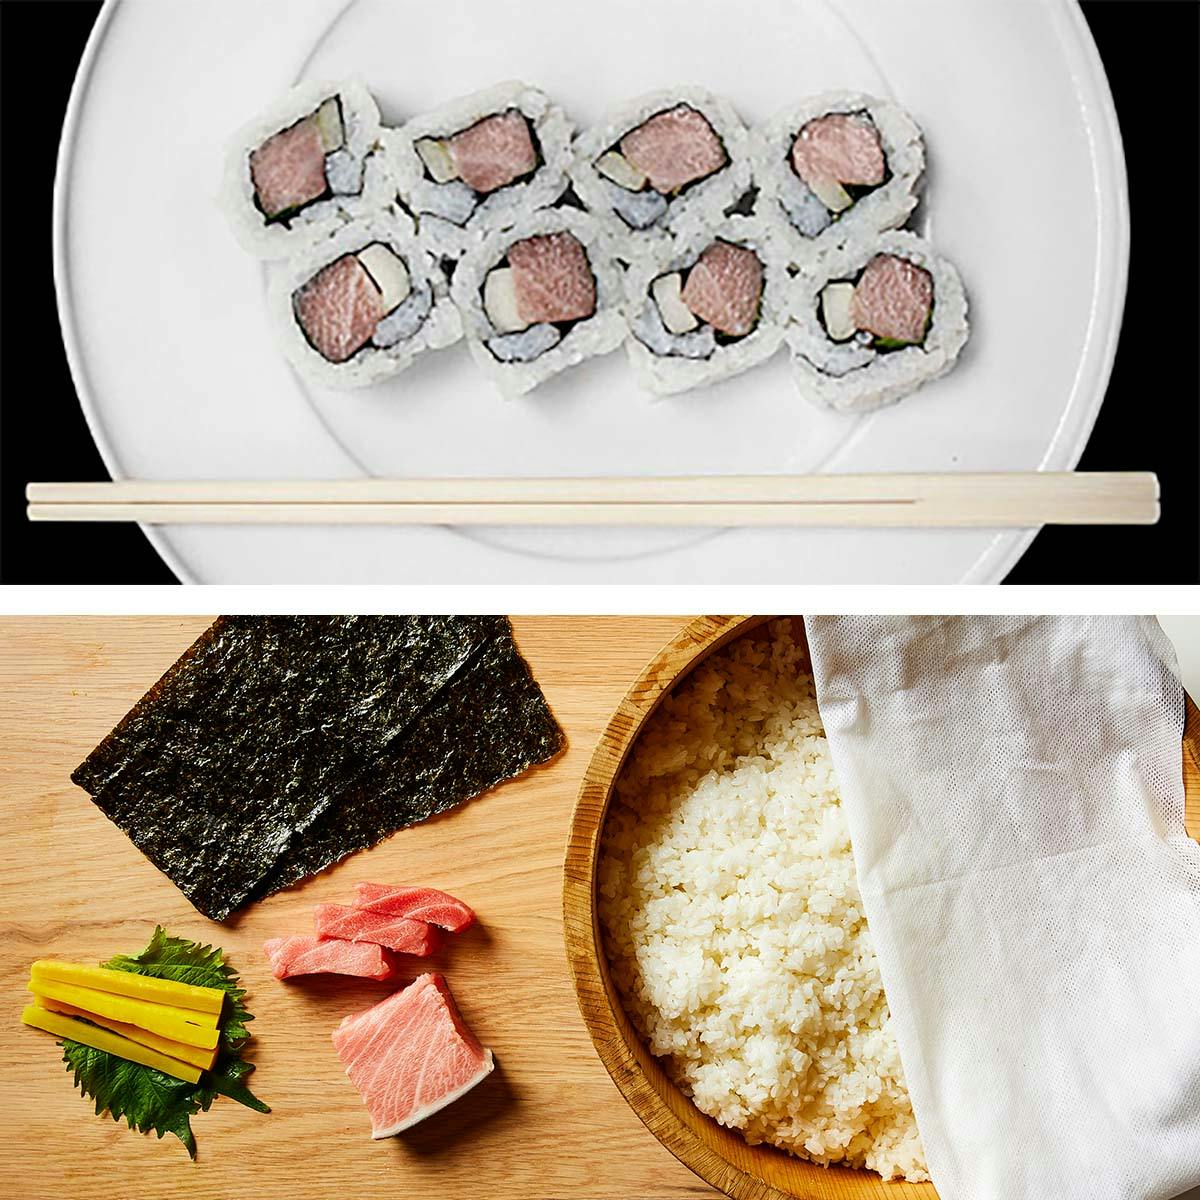 https://goldbelly.imgix.net/uploads/showcase_media_asset/image/142698/MakiMaki-Premium-Sushi-Kits.jpg?ixlib=rails-3.0.2